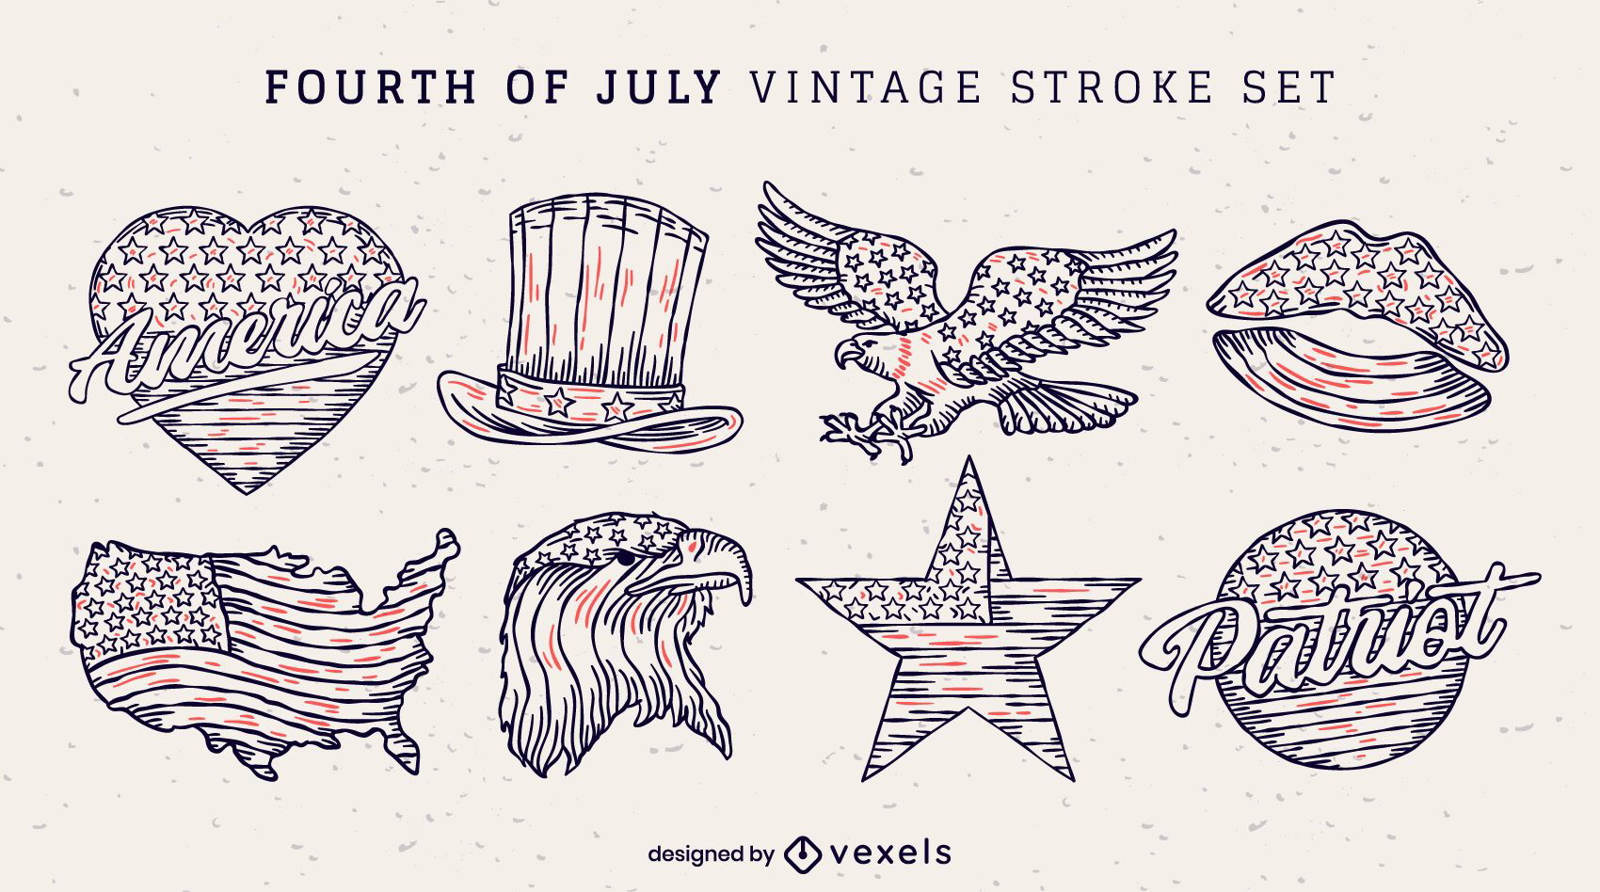 July 4th vintage stroke set of stickers